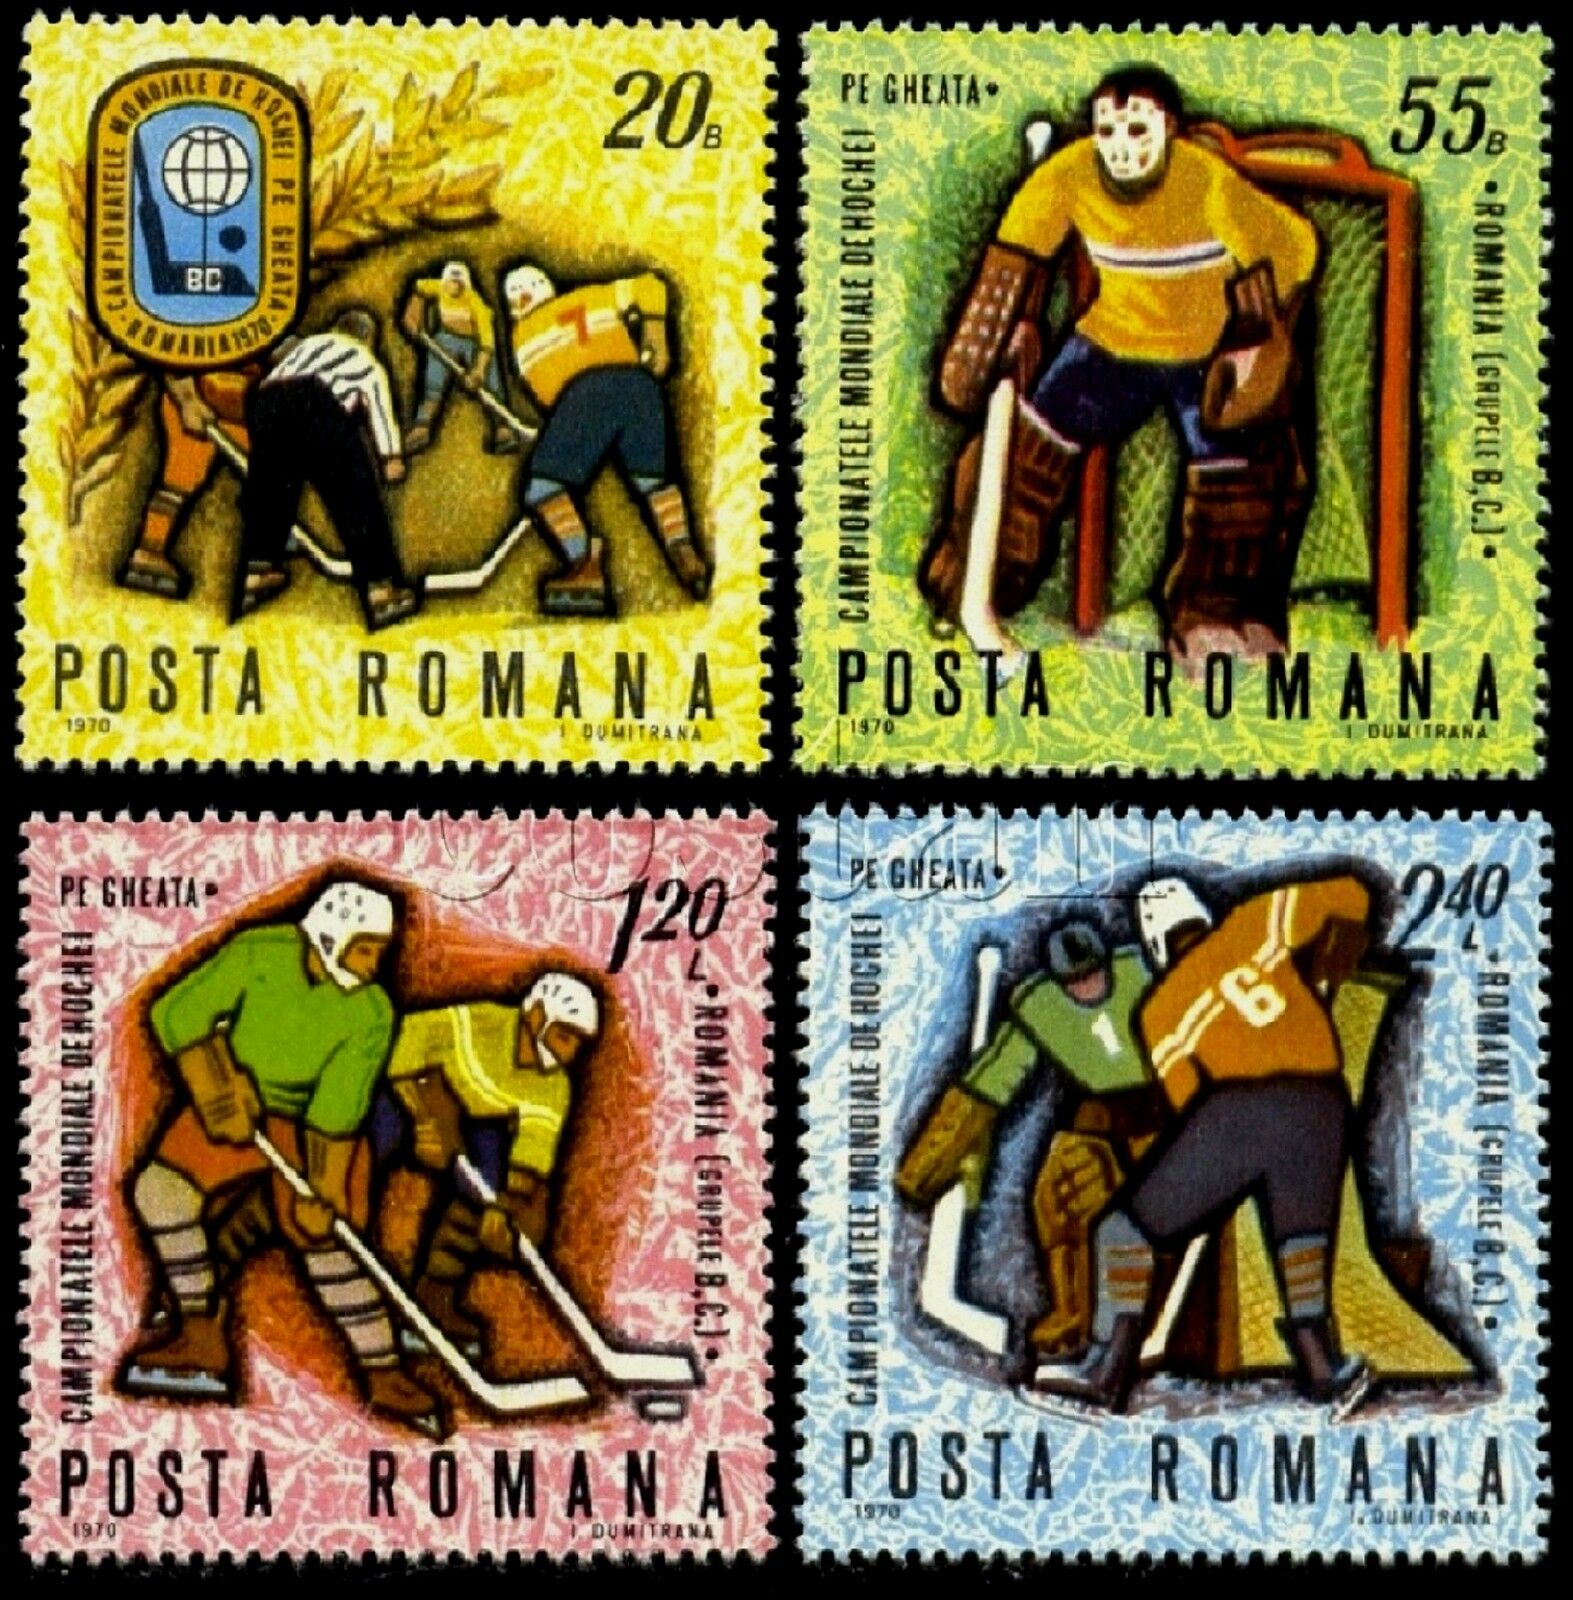 1970 Hockey,ice Hockey World Cup,eishockey,hockey Sur Glace,romania,mi.2820,mnh